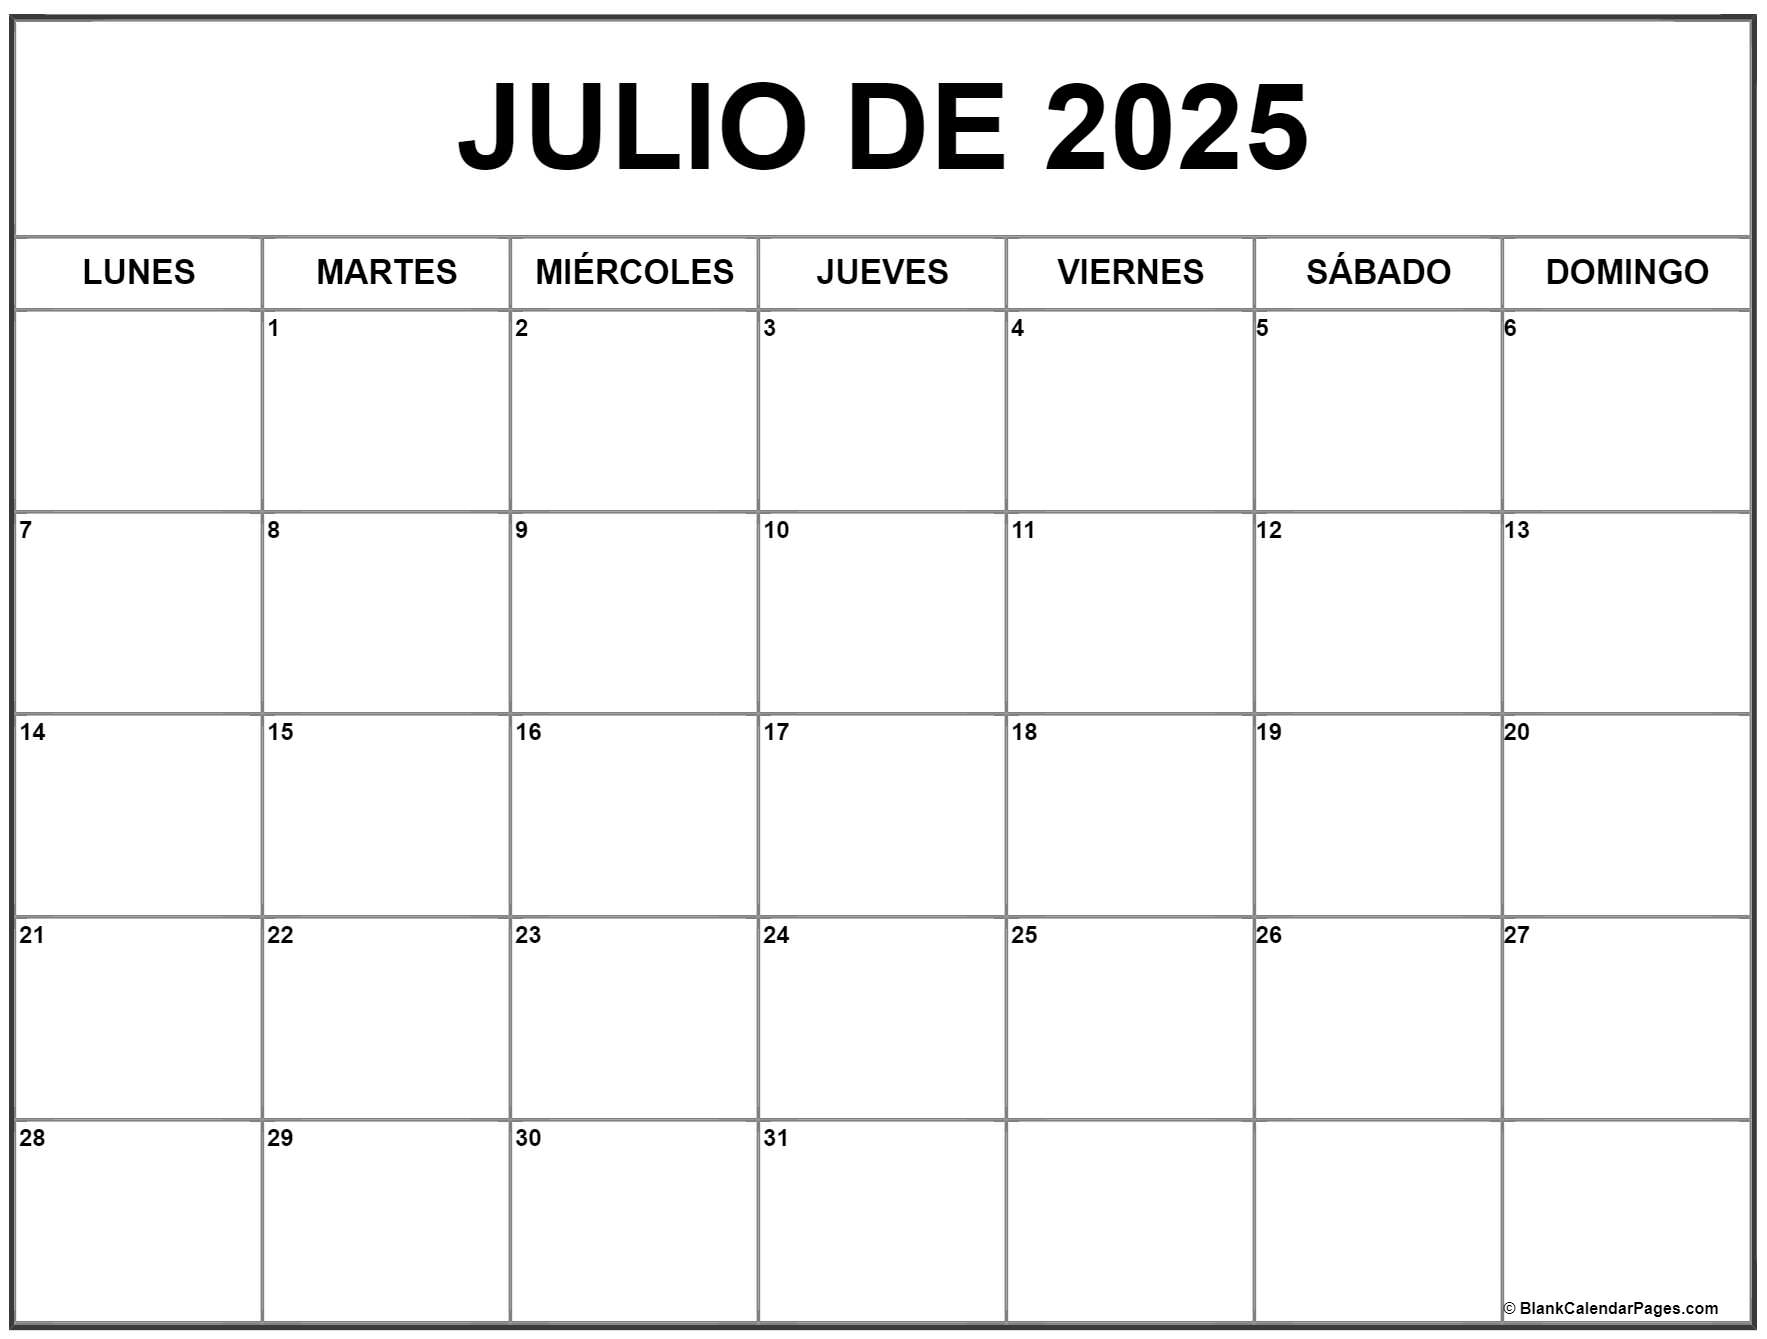 julio-de-2025-calendario-gratis-calendario-julio